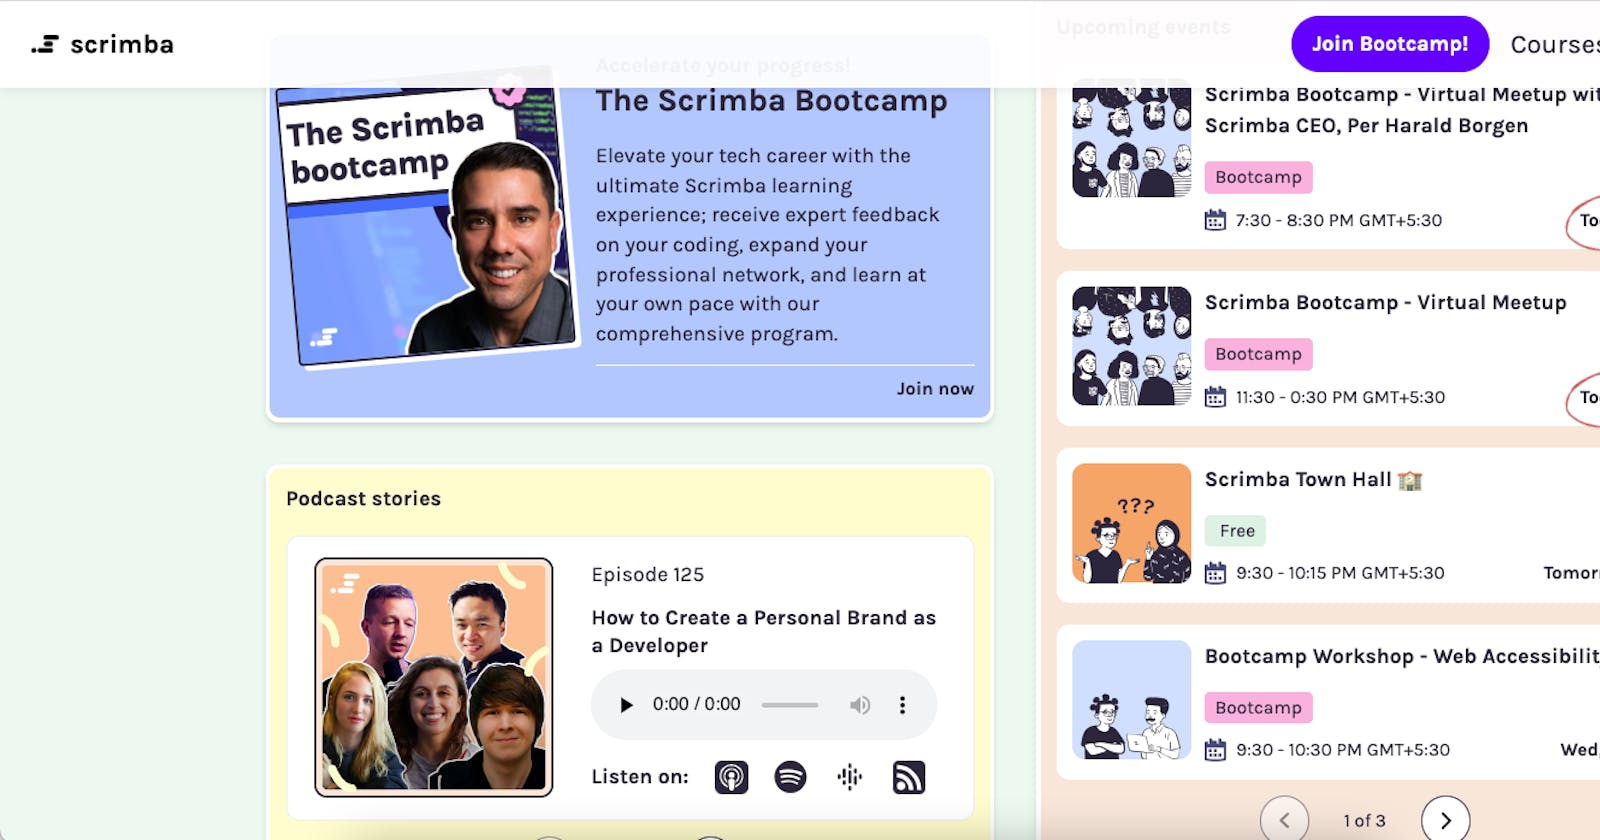 Scrimba Learning Platform: My Experience